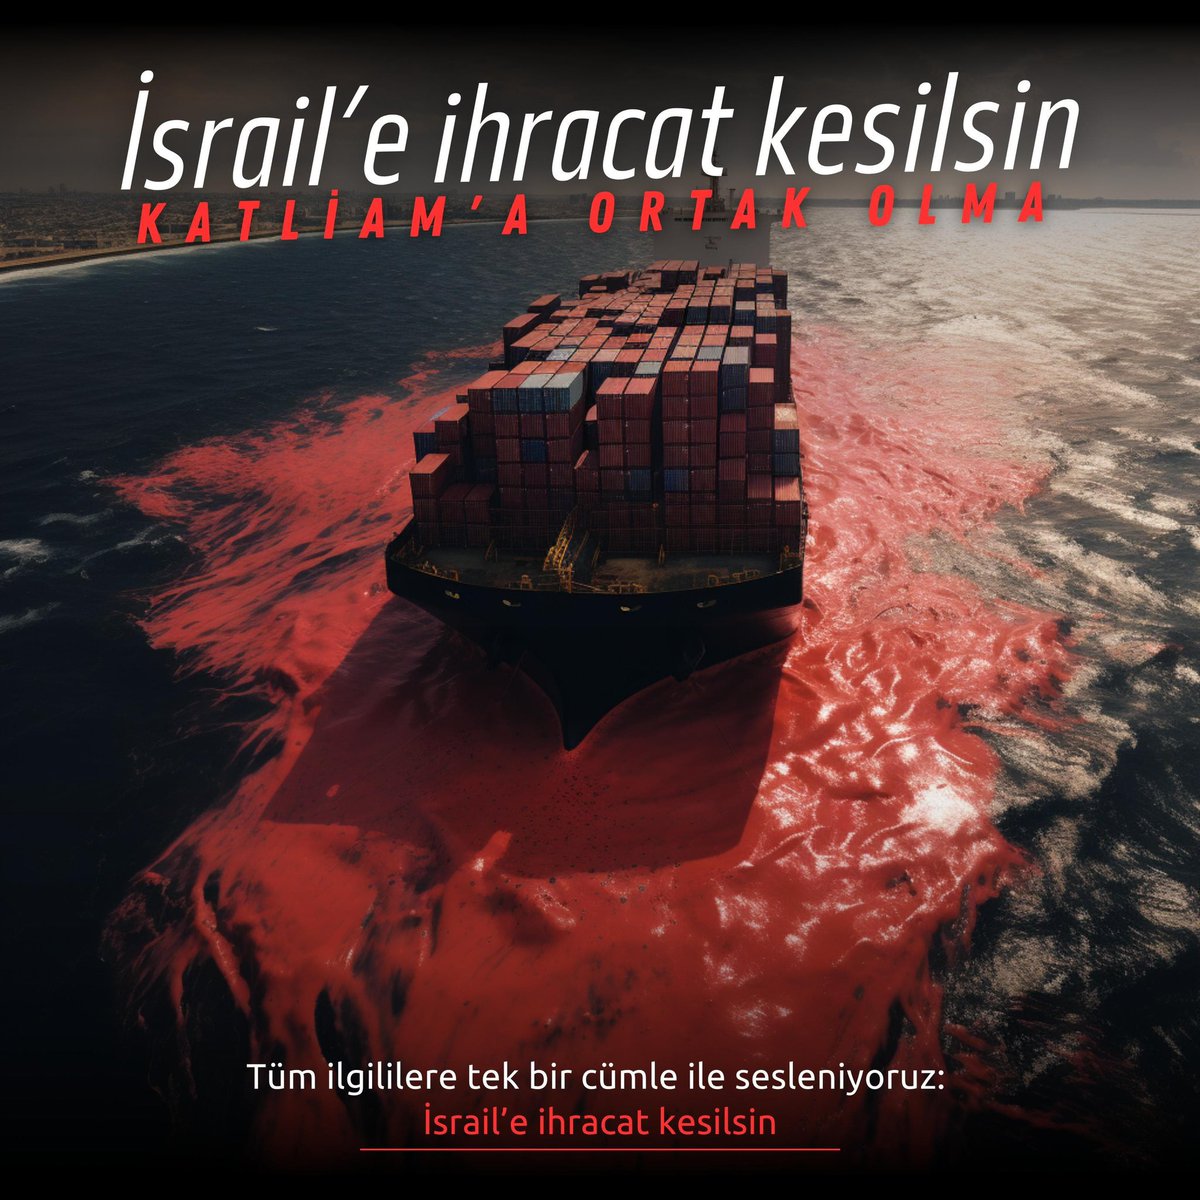 İsrail’e ihracat kesilsin 

@RTErdogan
@RTEdijital
@iletisim 
@tcbestepe 
@TCTarim
@ibrahimyumakli
@ticaret 
@omerbolatTR
@mehmethaditunc
@mustuzcu